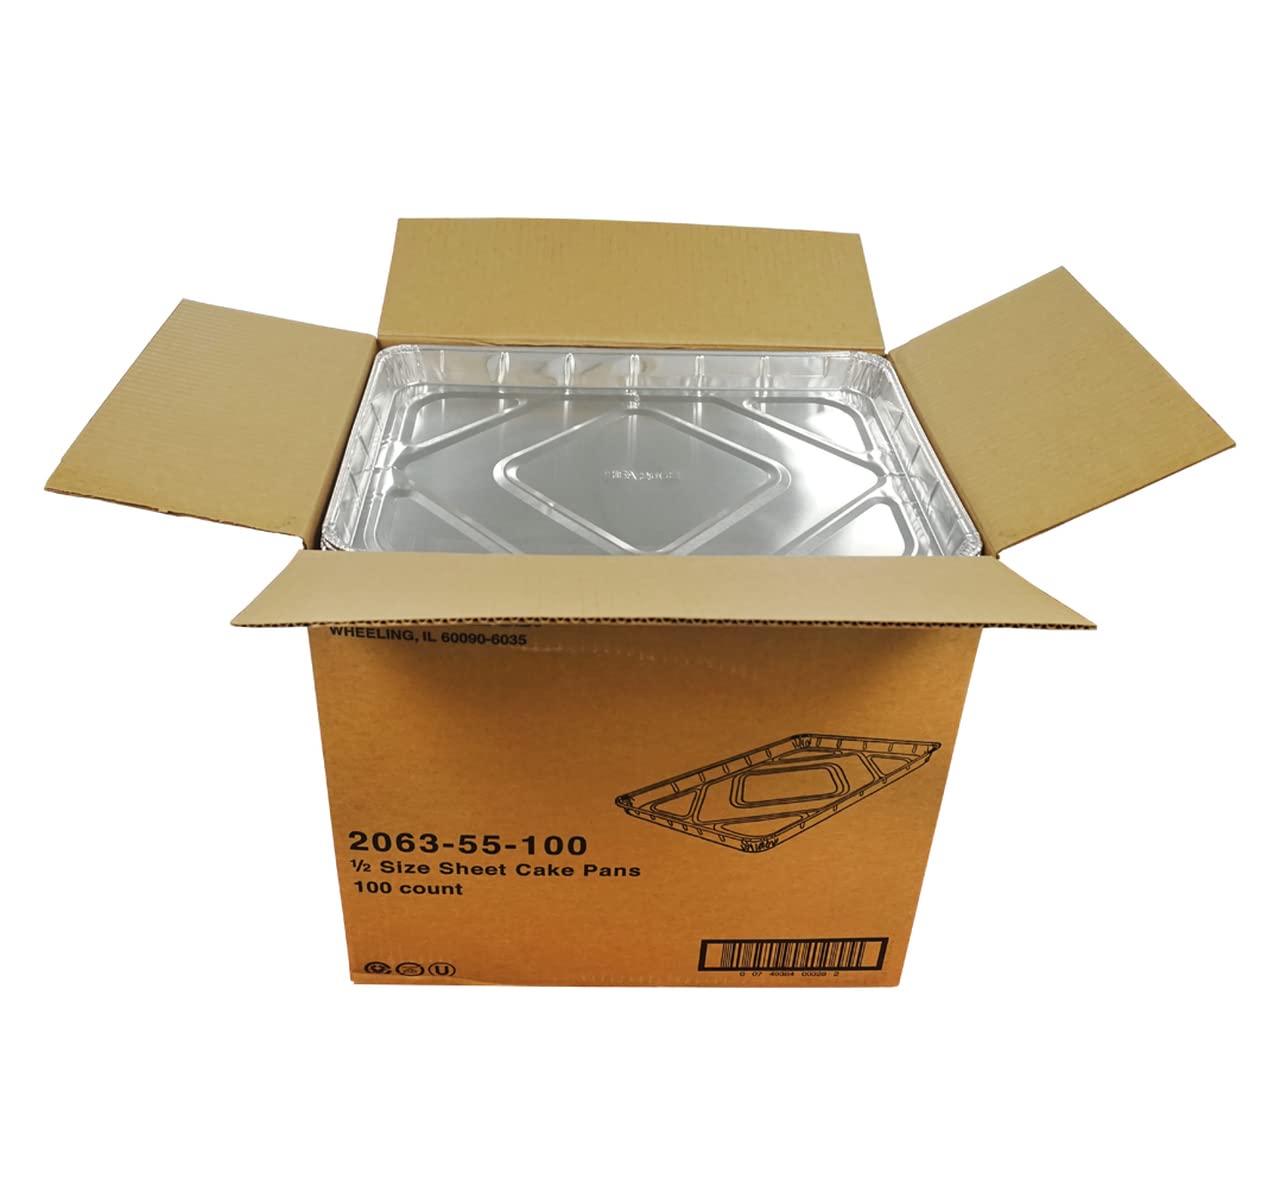 HFA 2063, Half-Size Aluminum Foil Baking Sheet Cake Pans, Take Out Baking Disposable Foil Containers (100)